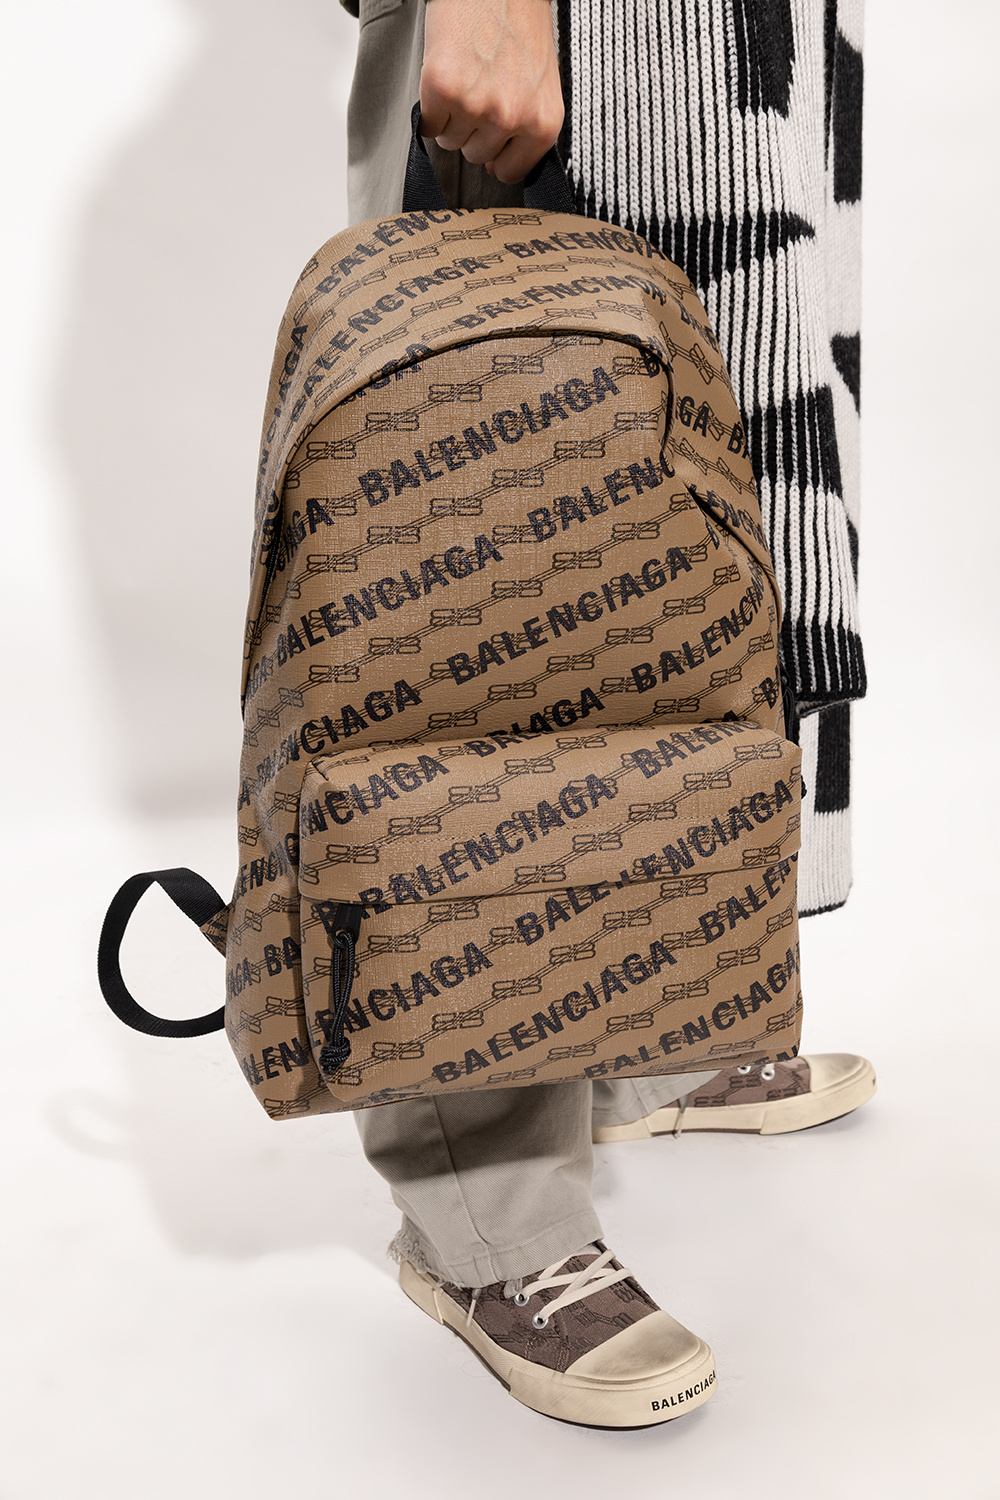 Louis Vuitton District Pm Messenger Bag - clothing & accessories - by owner  - apparel sale - craigslist